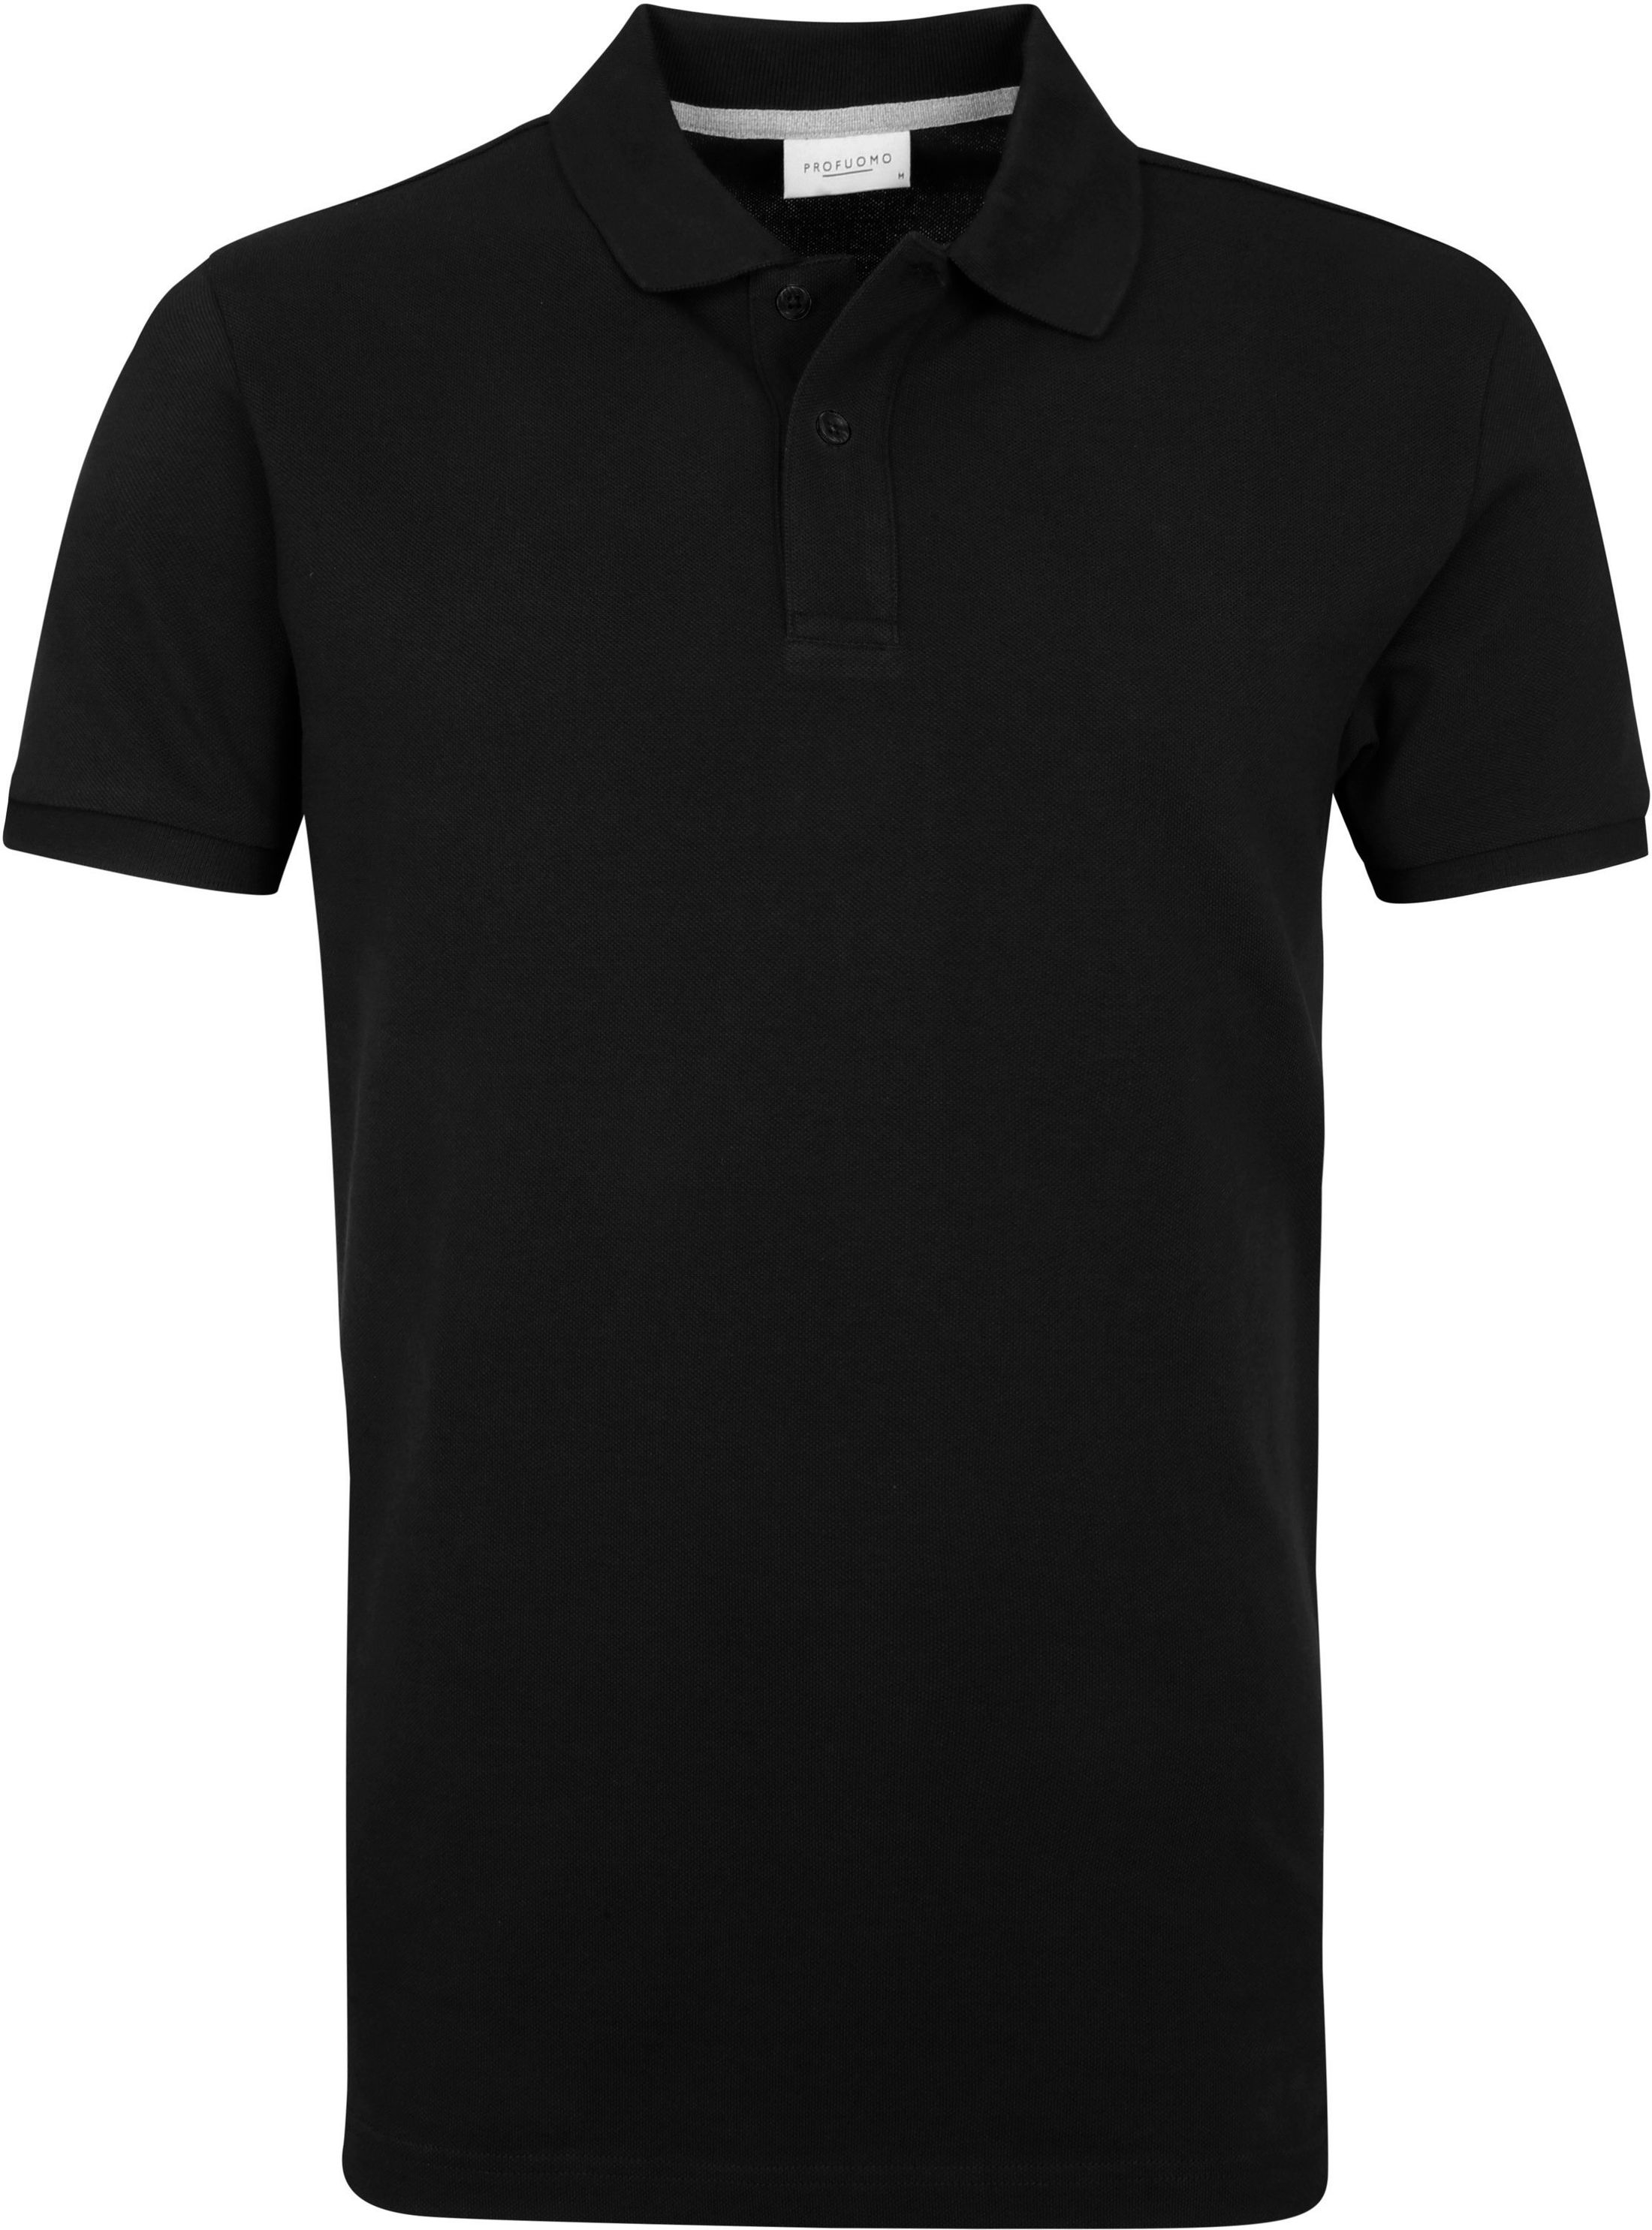 Profuomo Pique Polo Shirt Black size L